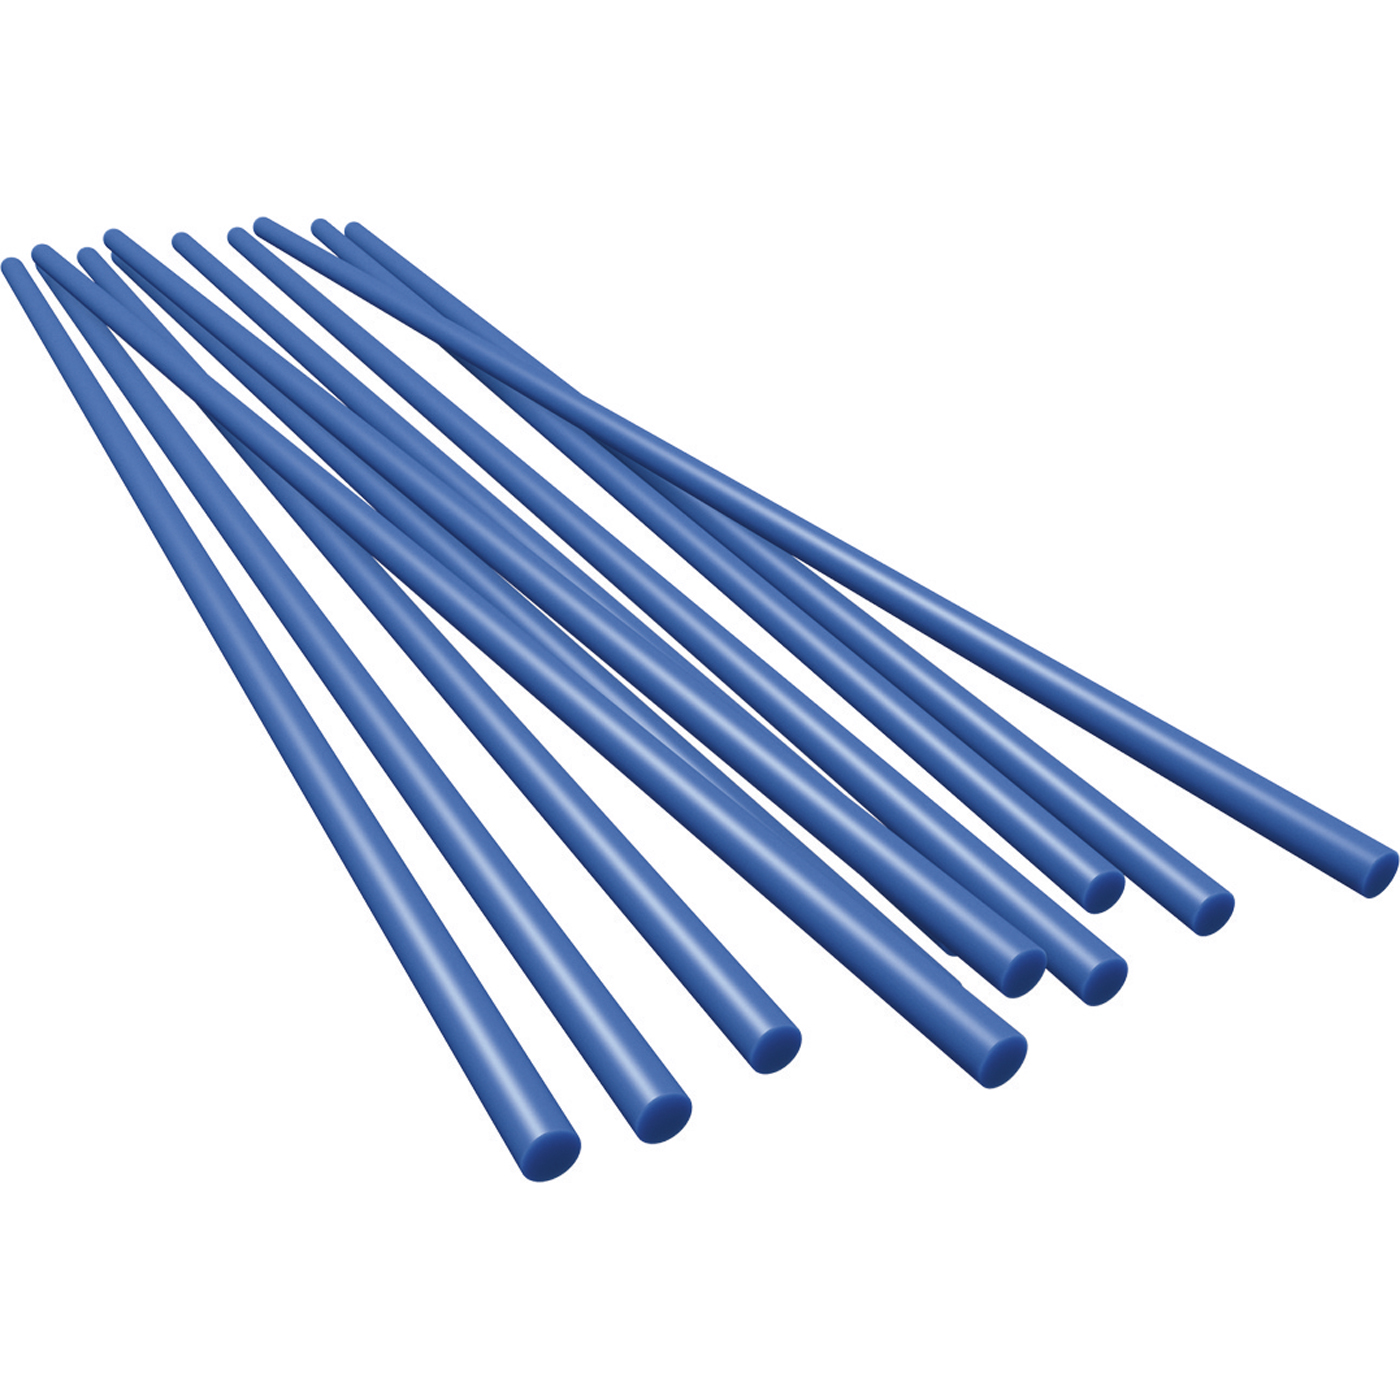 Wax Wire, Bars, Round, 0.6 mm, Blue - 1 pack